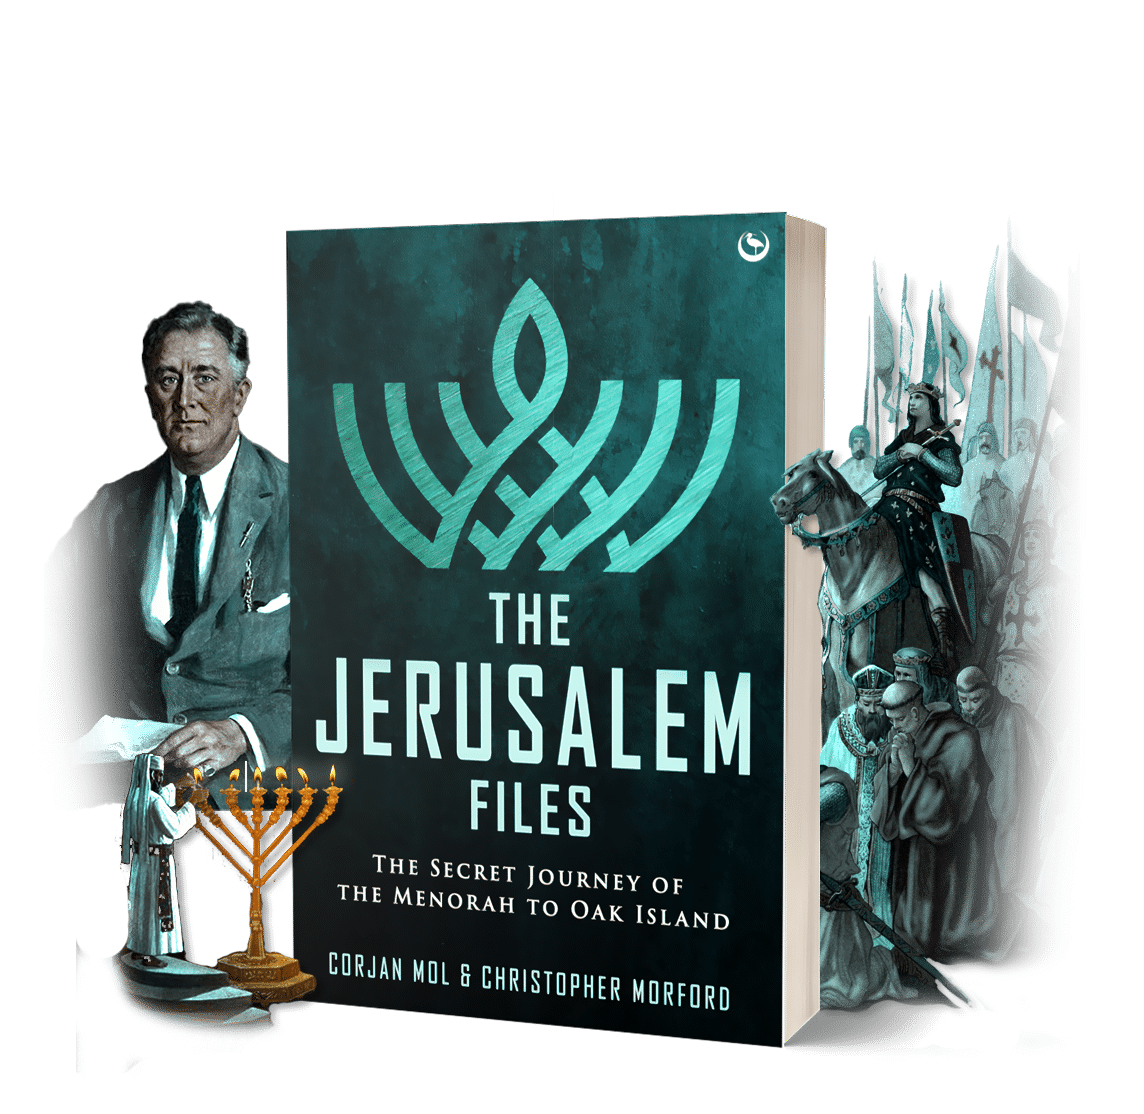 The Jerusalem Files, the secret journey of the Menorah to Oak Island, a book by Corjan Mol & Christopher Morford